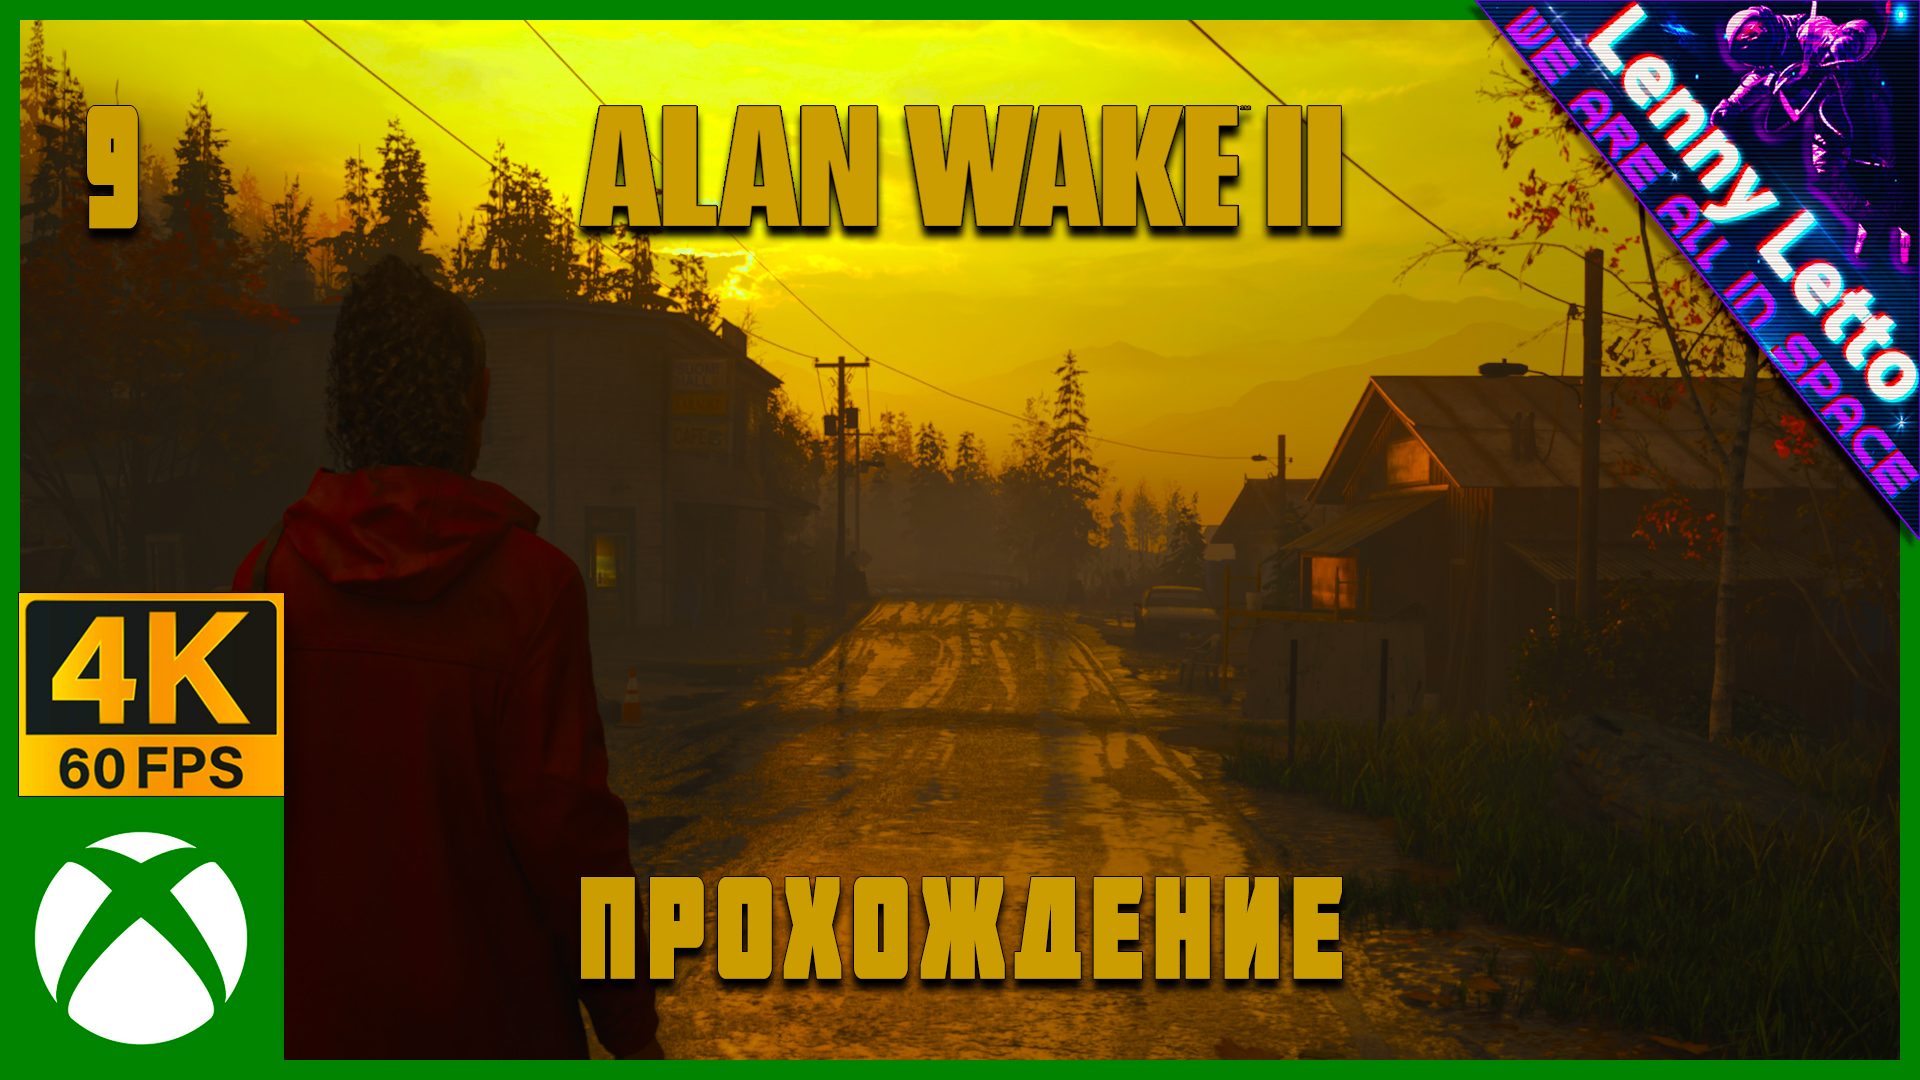 Alan Wake 2 | Прохождение. Часть 9 | XBSX 4K 60FPS